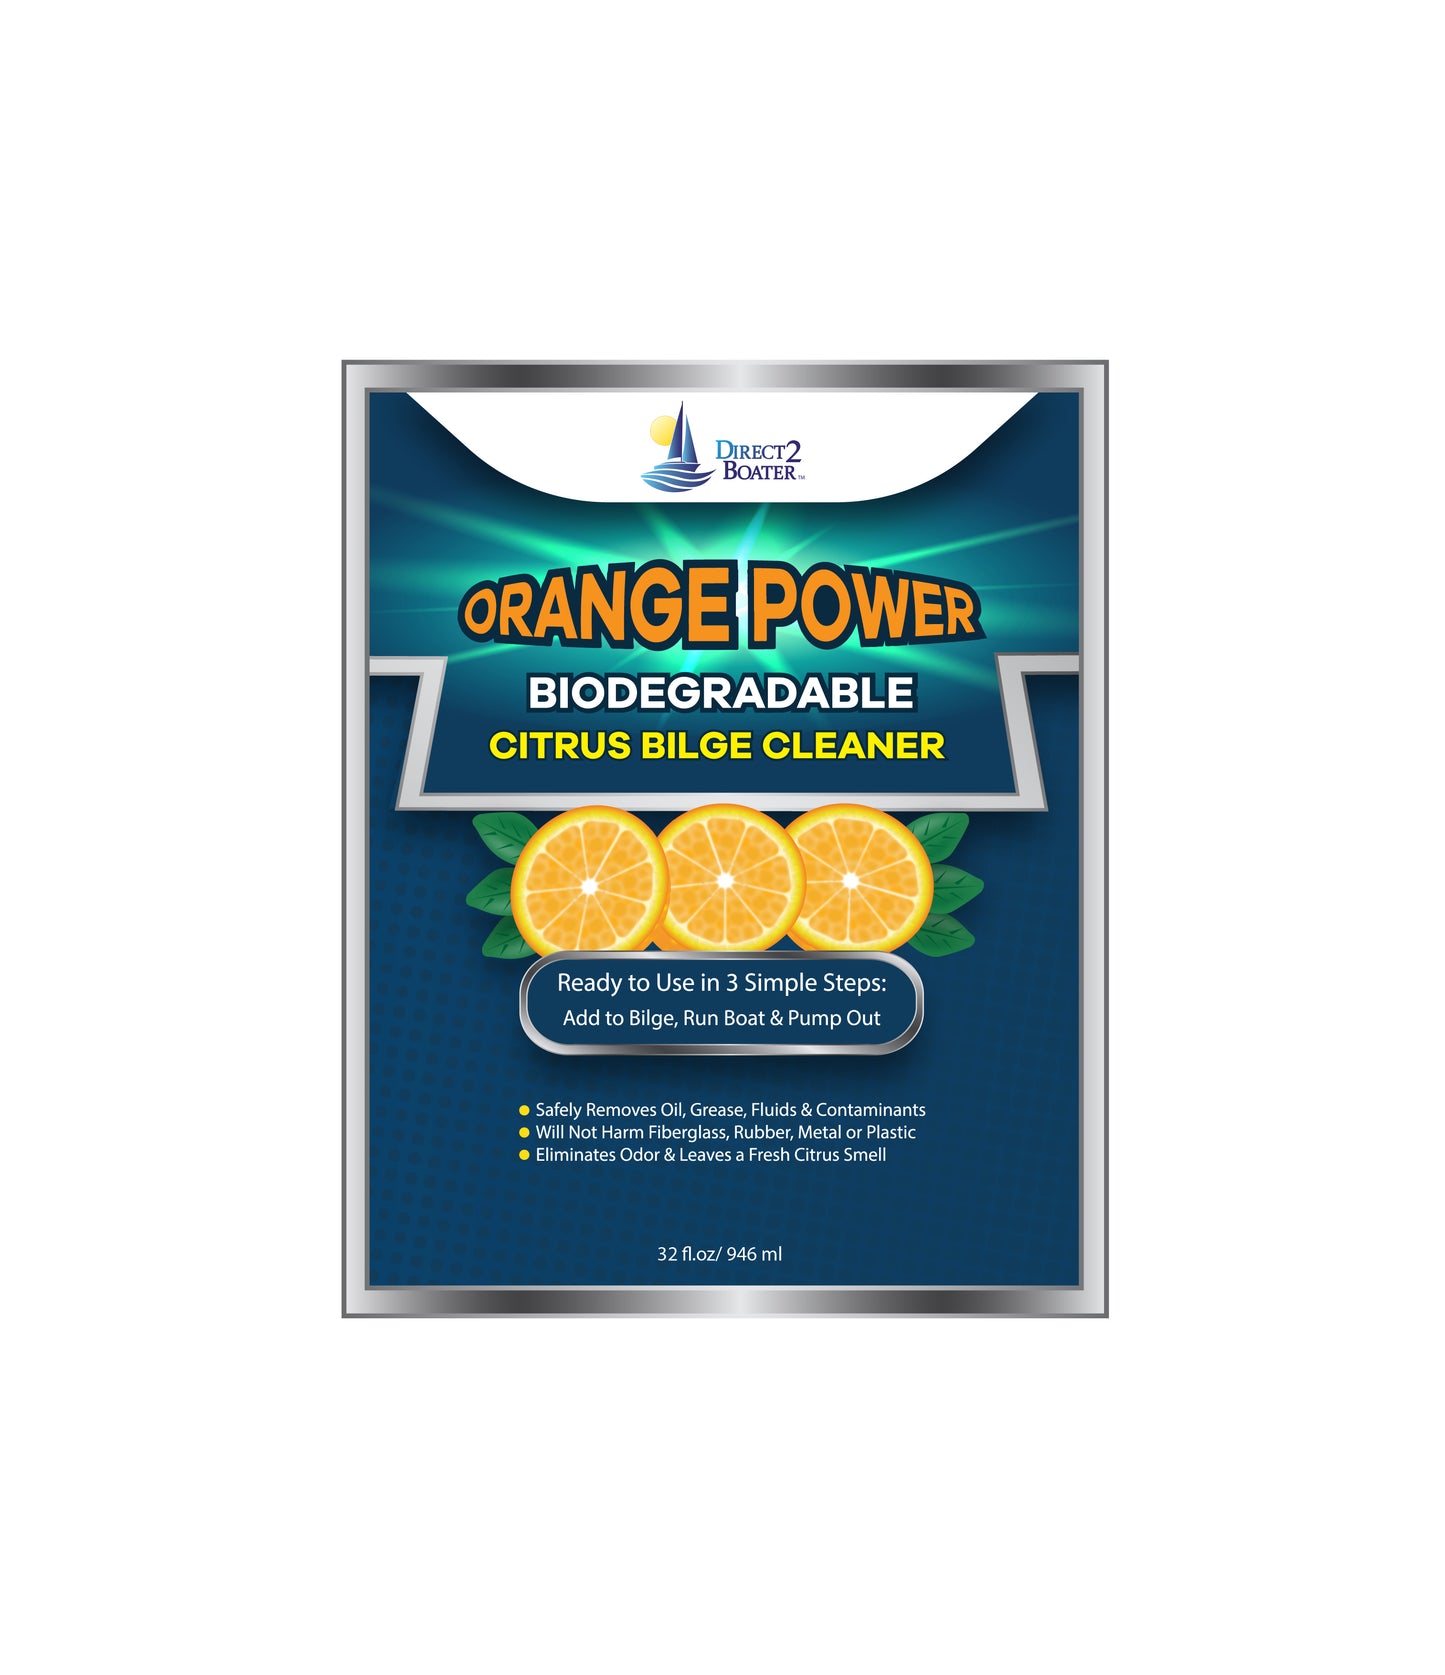 Orange Power Biodegradable Citrus Bilge Cleaner for Boats - 32 fl oz - Eliminates Odor & Leaves a Fresh Citrus Smell